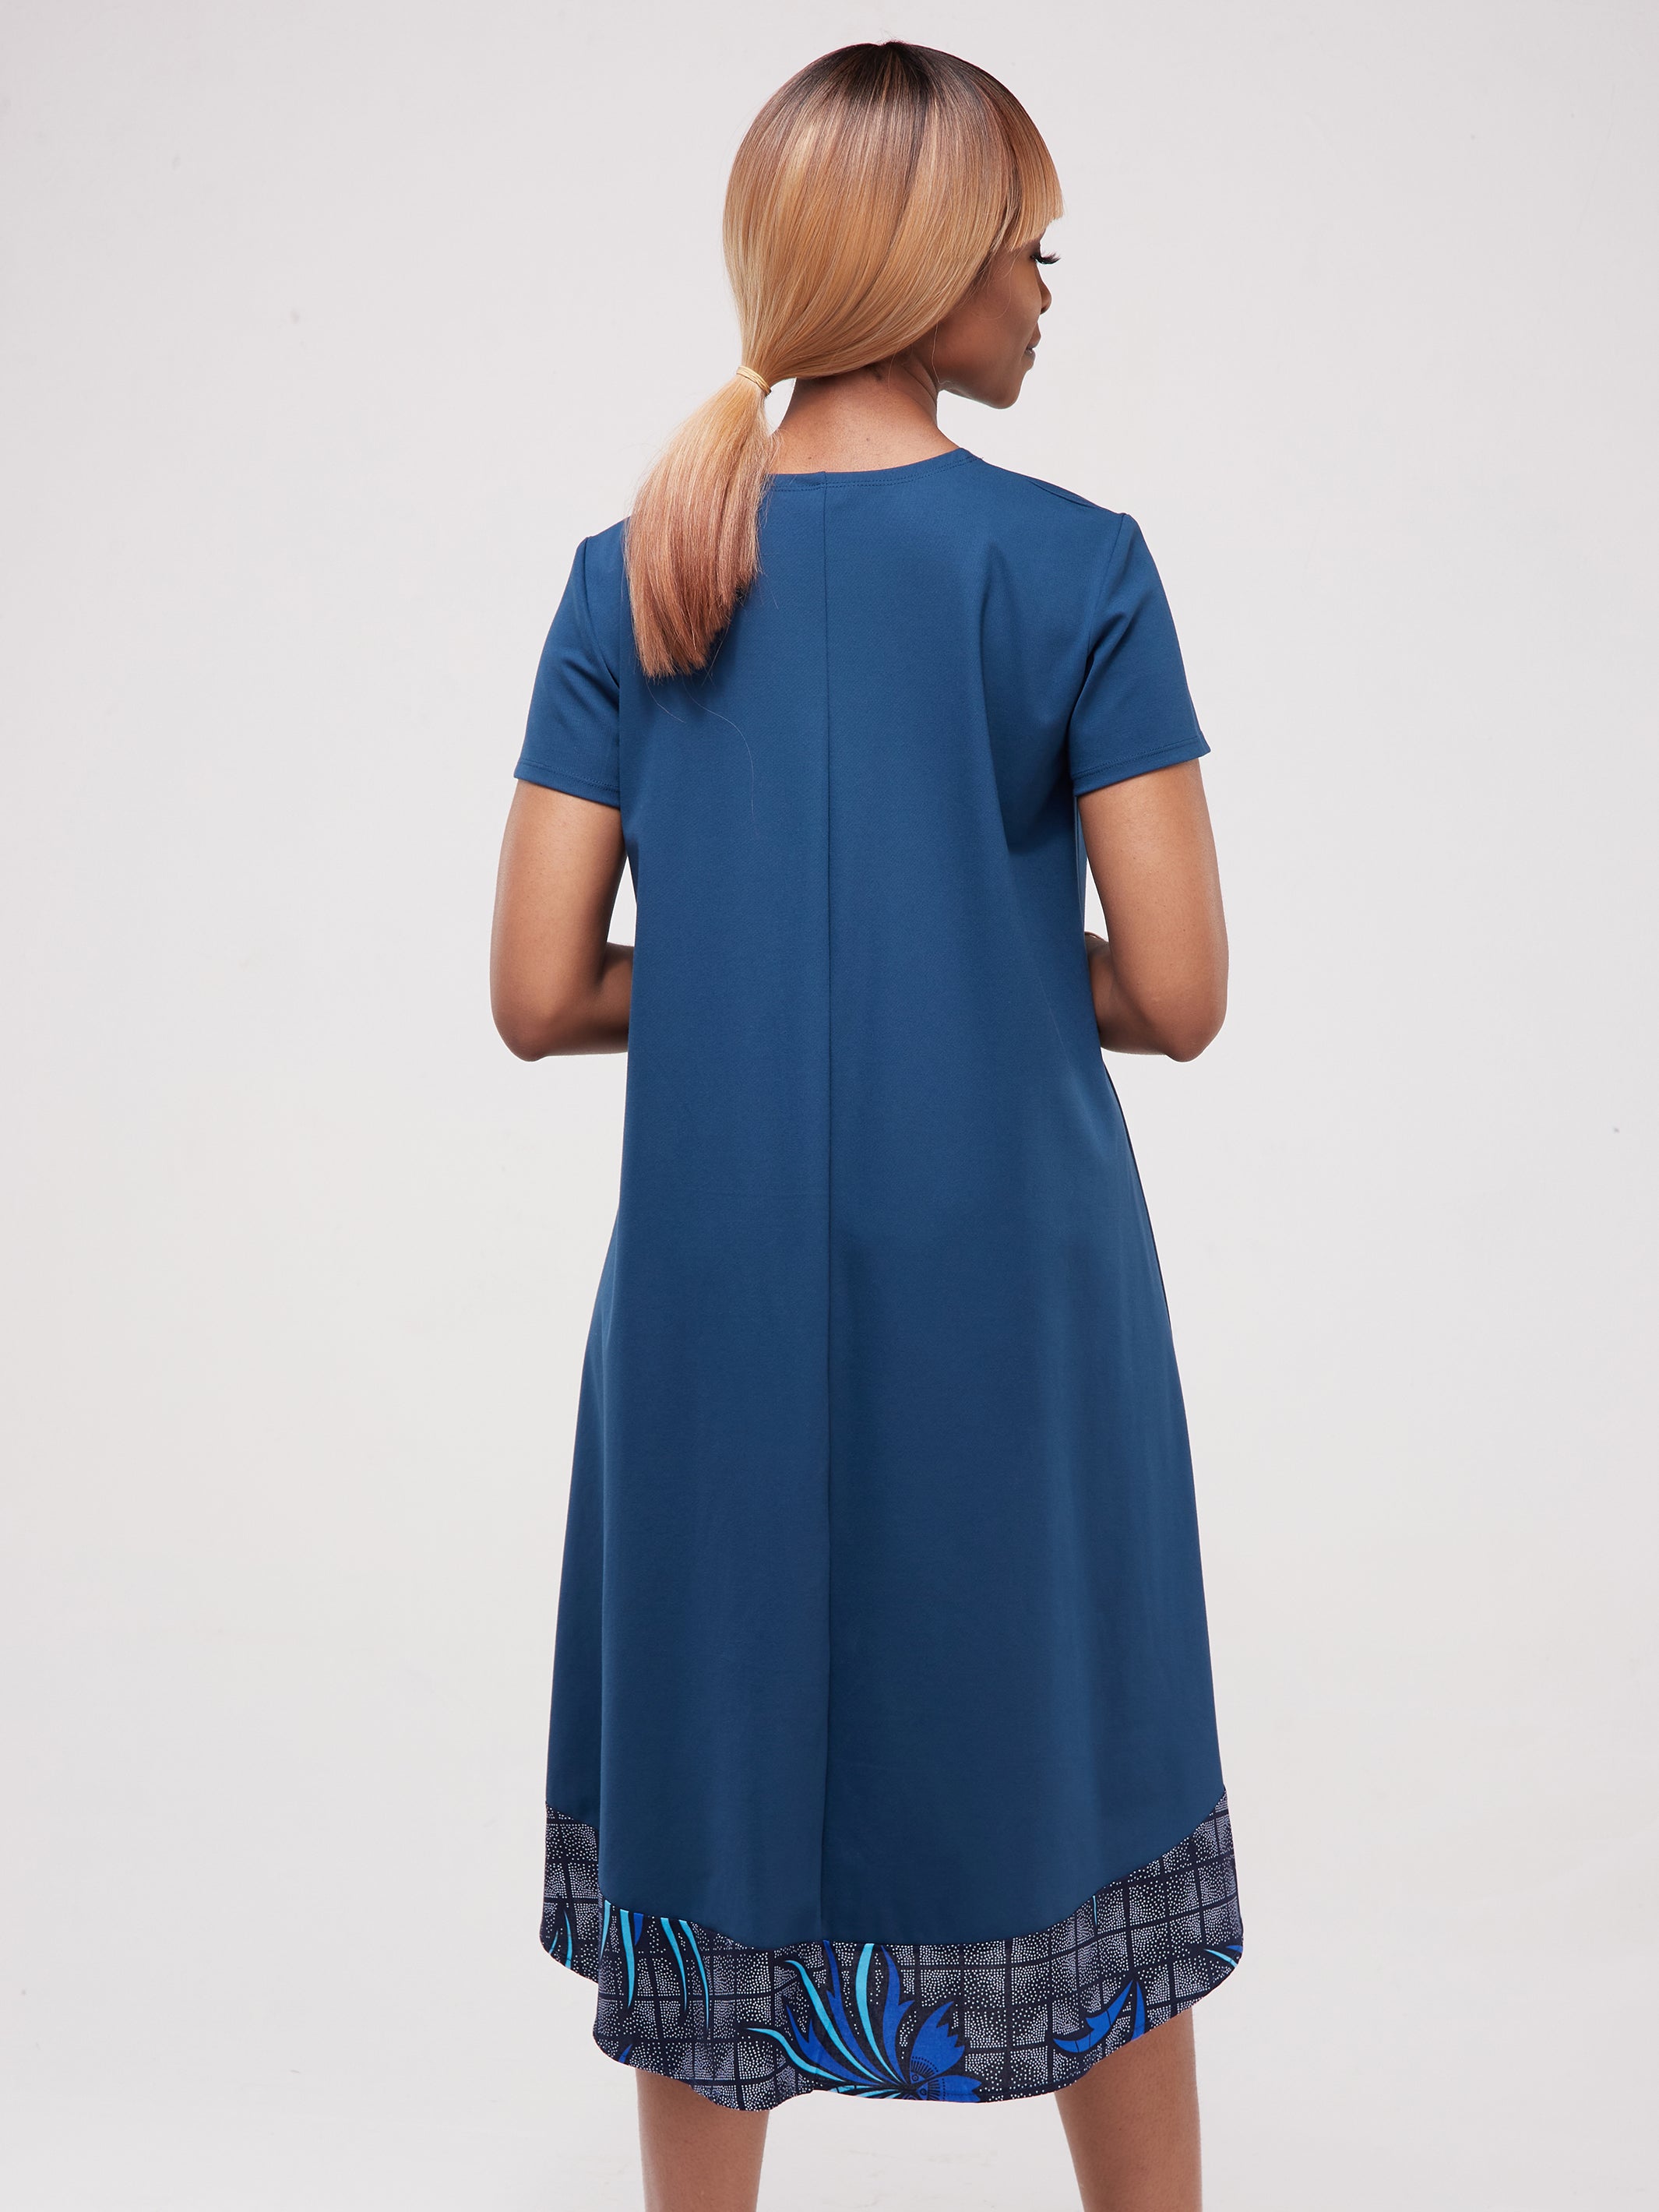 Vivo Mali High Low Dress - Teal / Navy Print